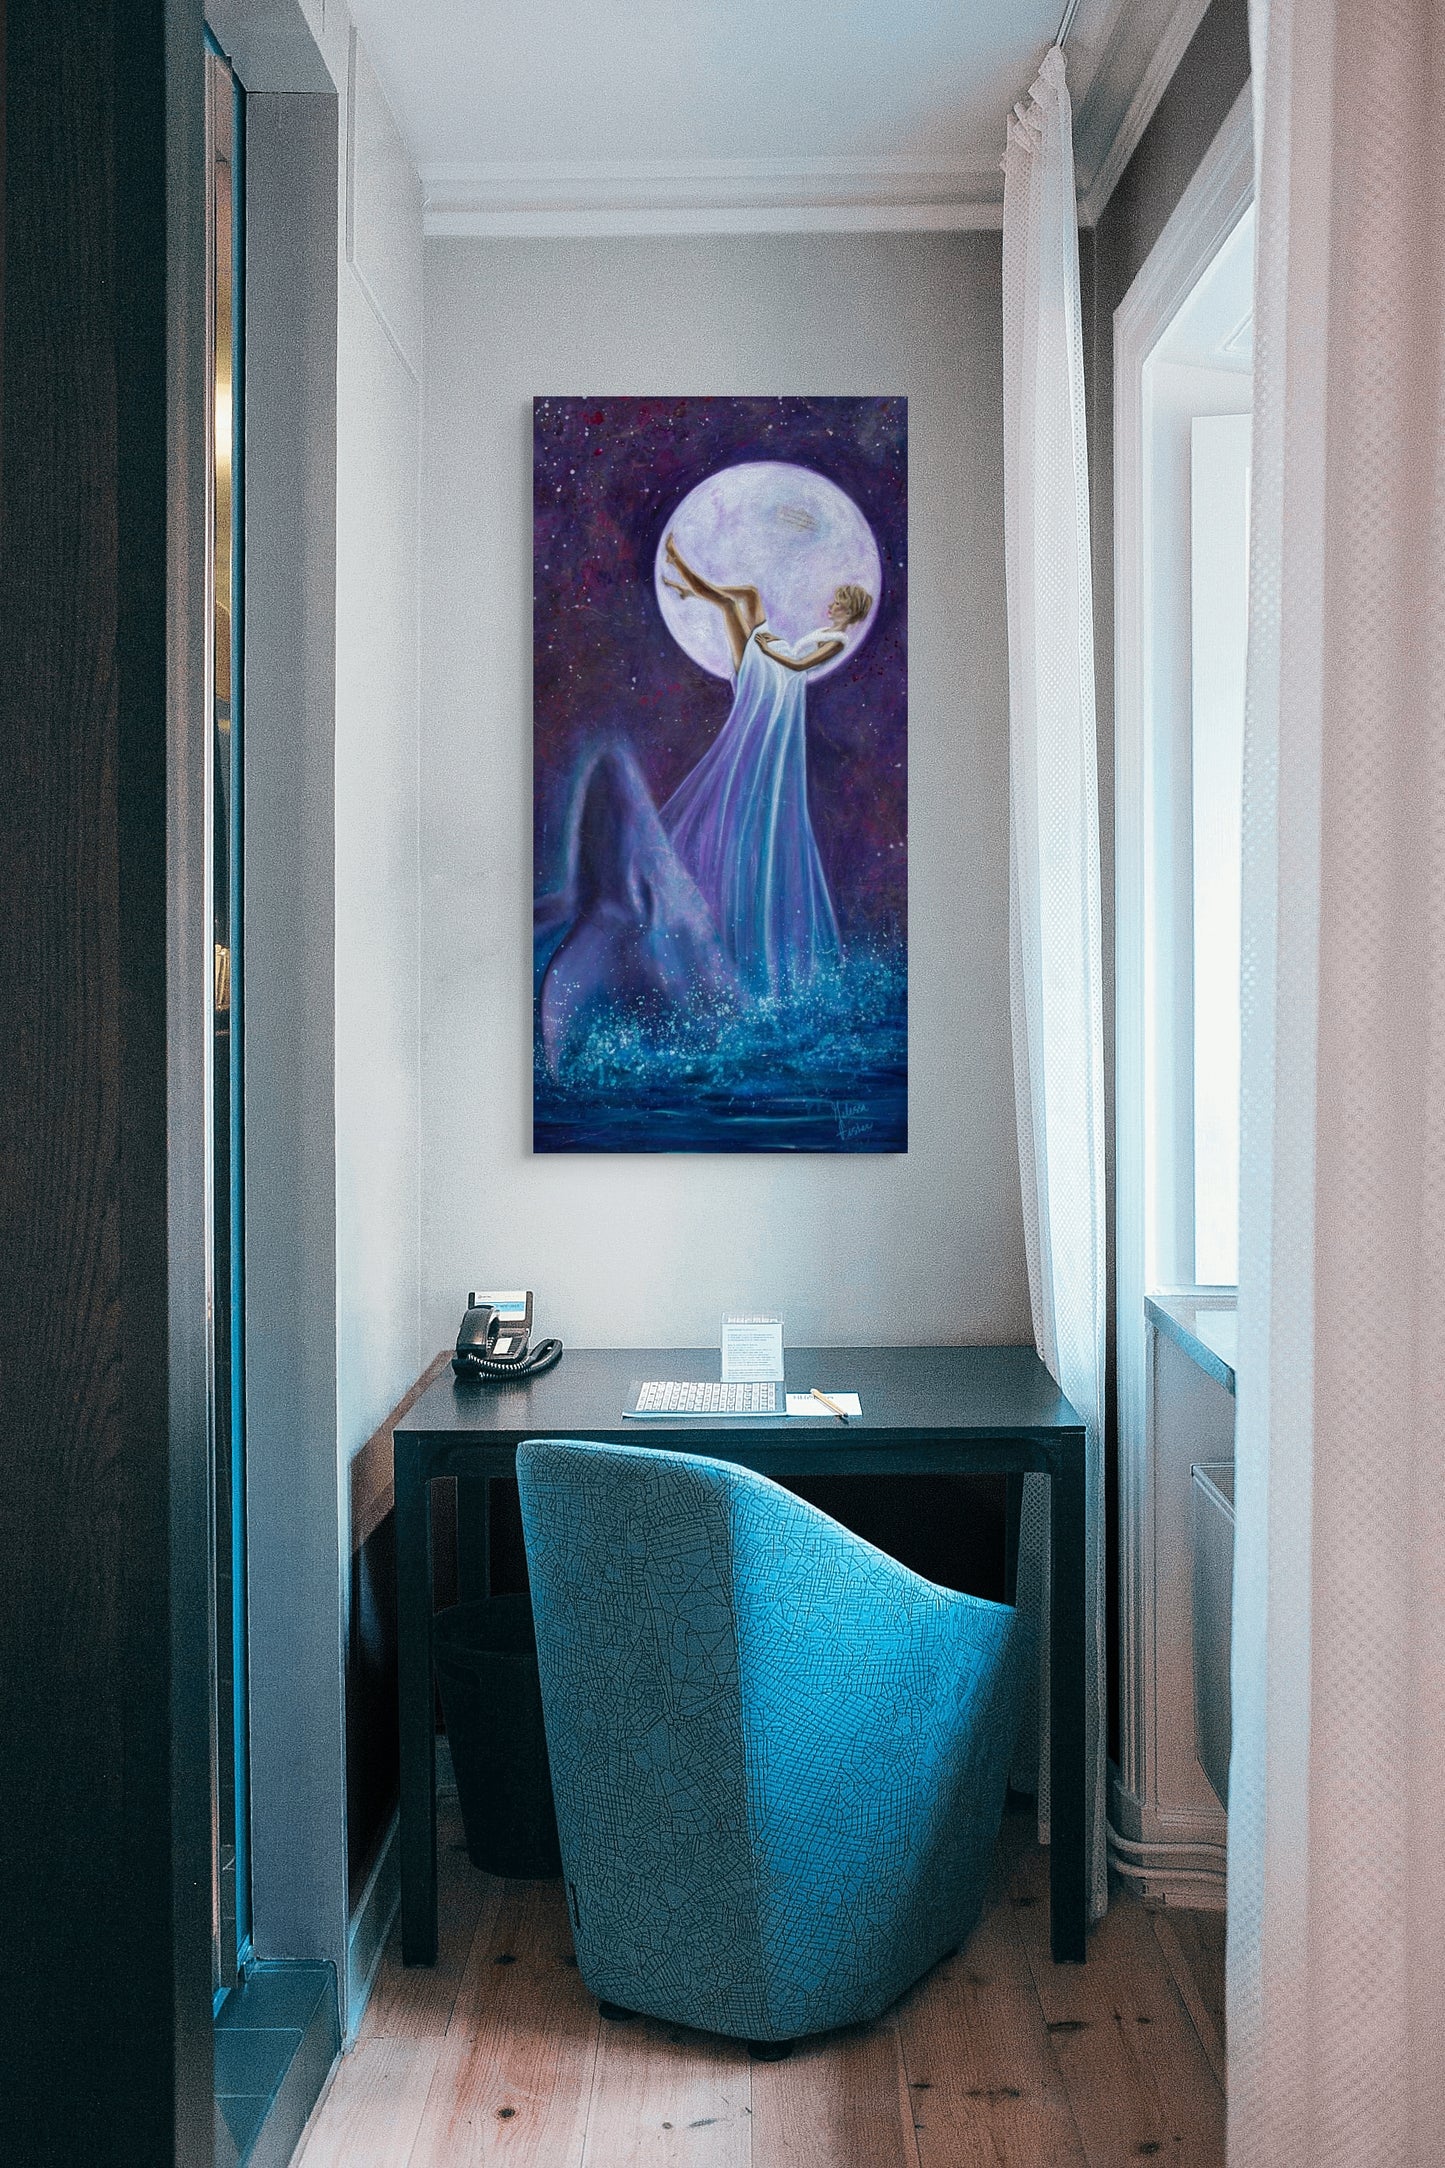 Moon Child - Original Painting on Canvas